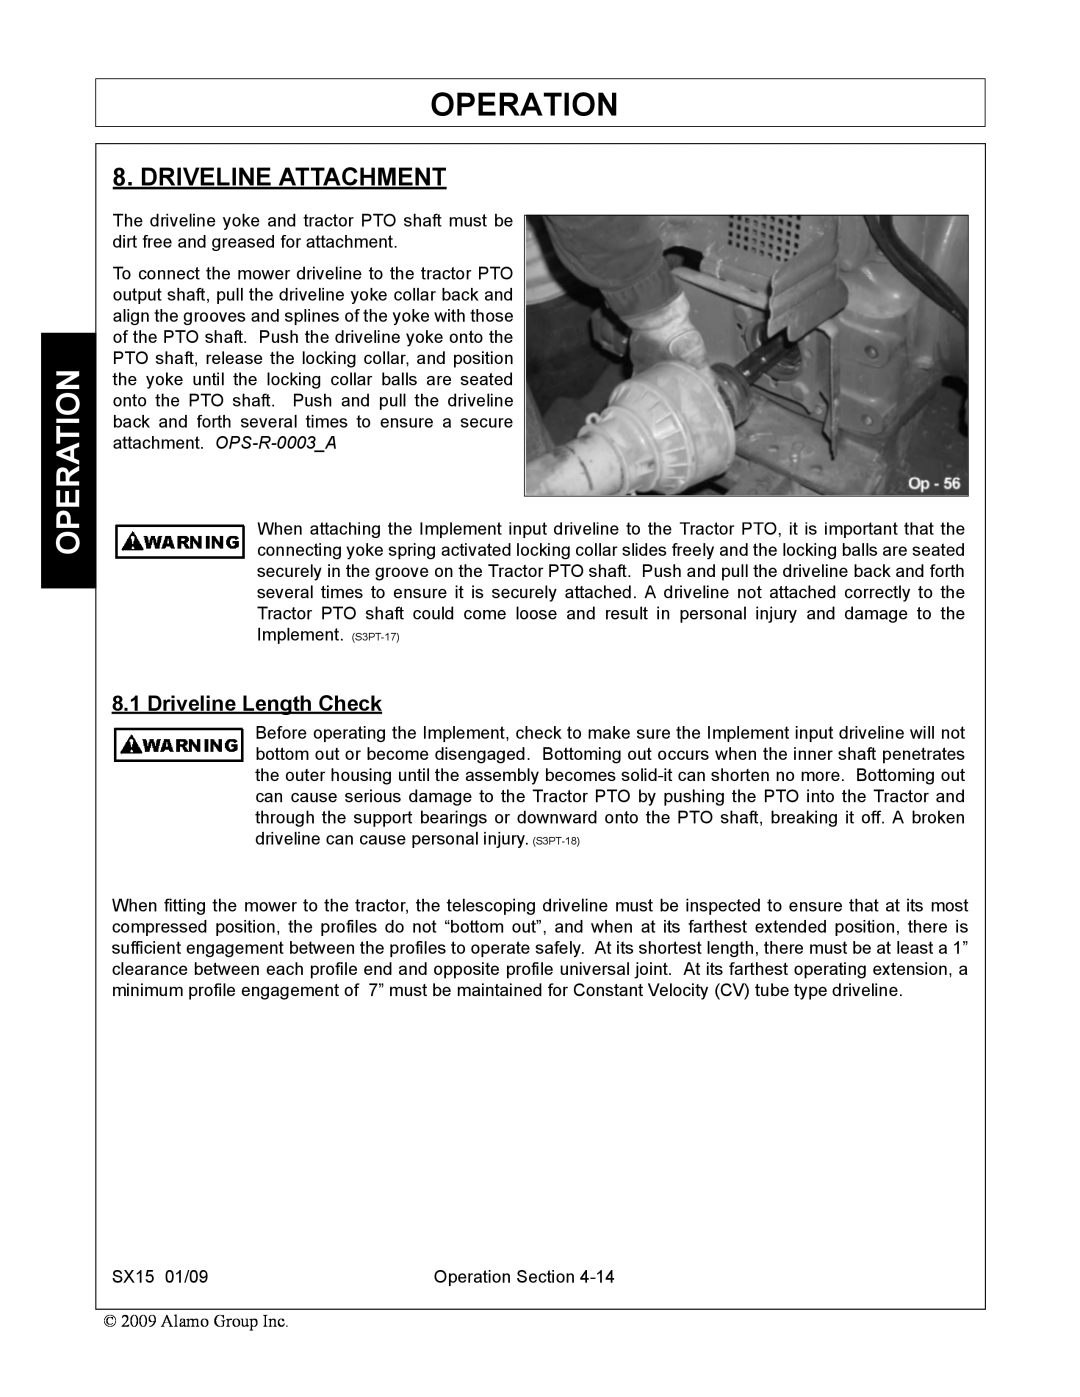 Alamo SX15 manual Driveline Attachment, Driveline Length Check, Operation 